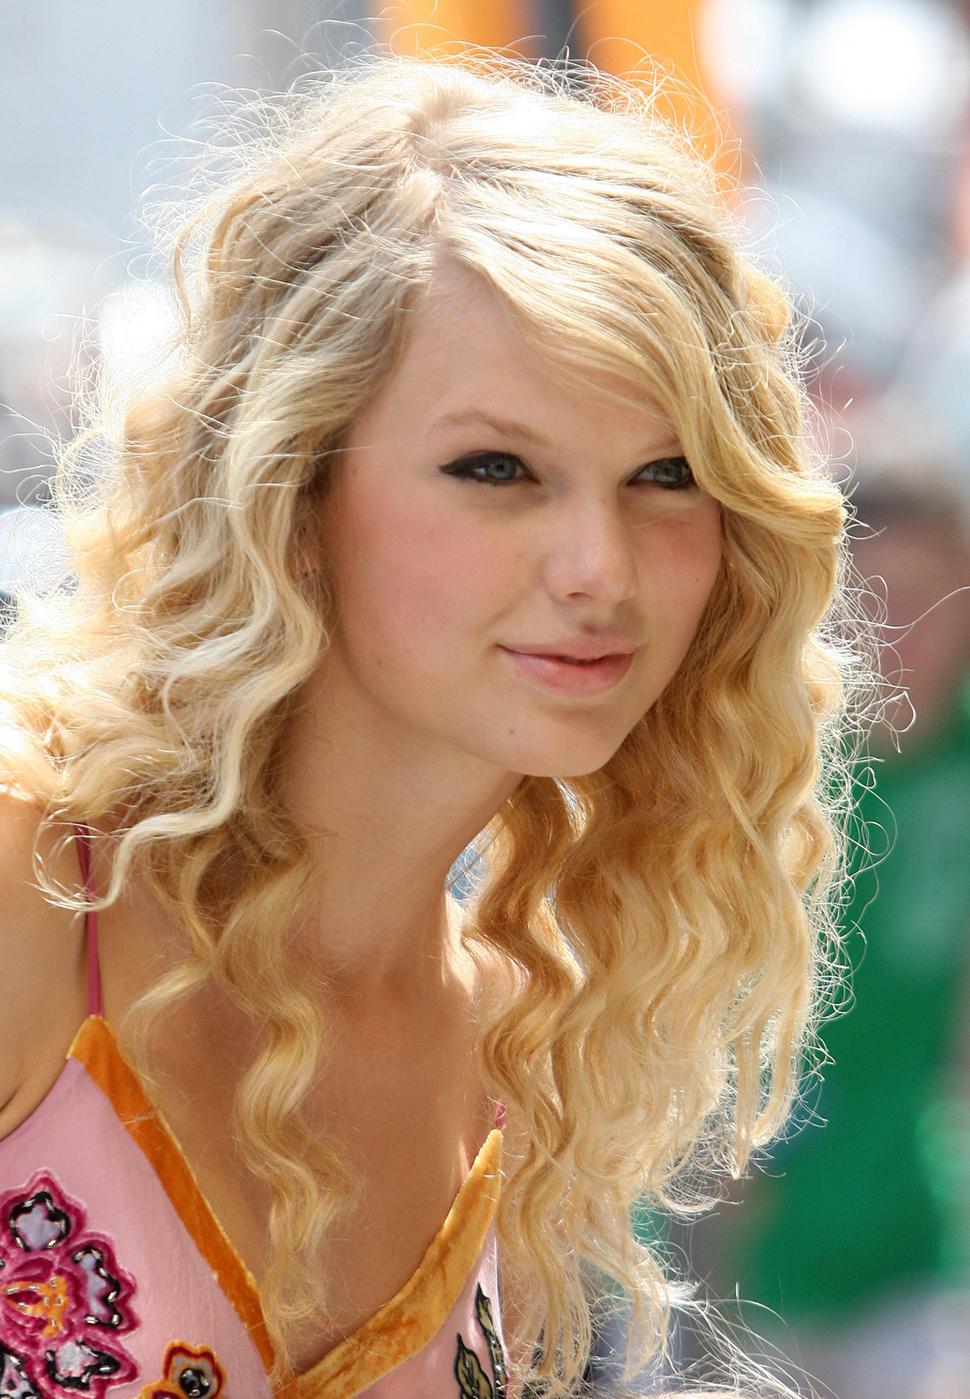 Taylor-Swift_1